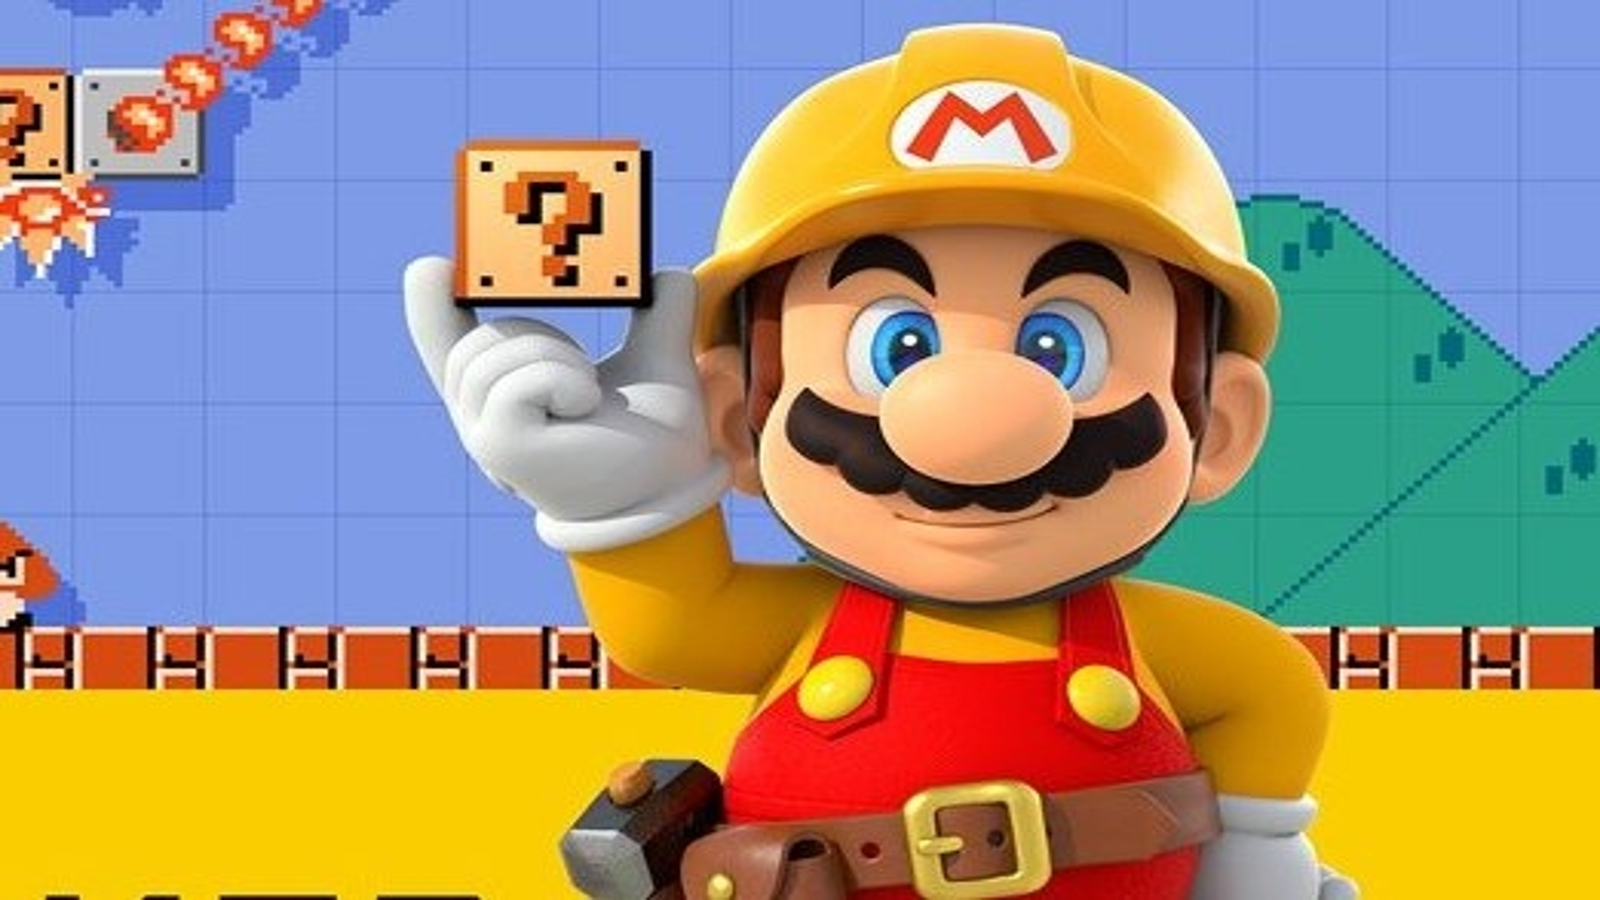 Super Mario Odyssey levels in Super Mario Maker 2 - Video